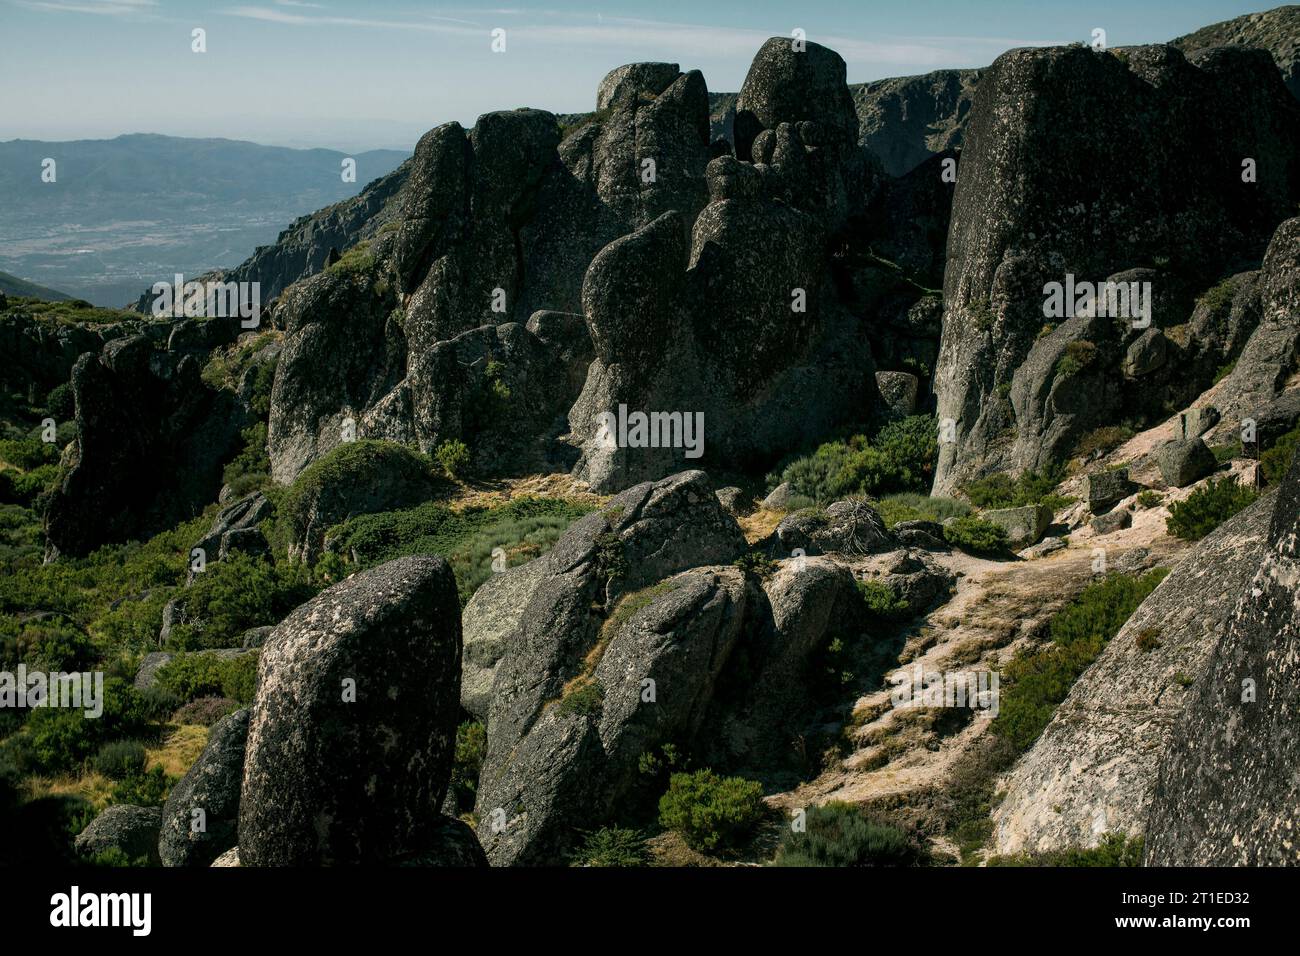 Rocks in a mountain range in Serra da Estrela, Portugal. Stock Photo